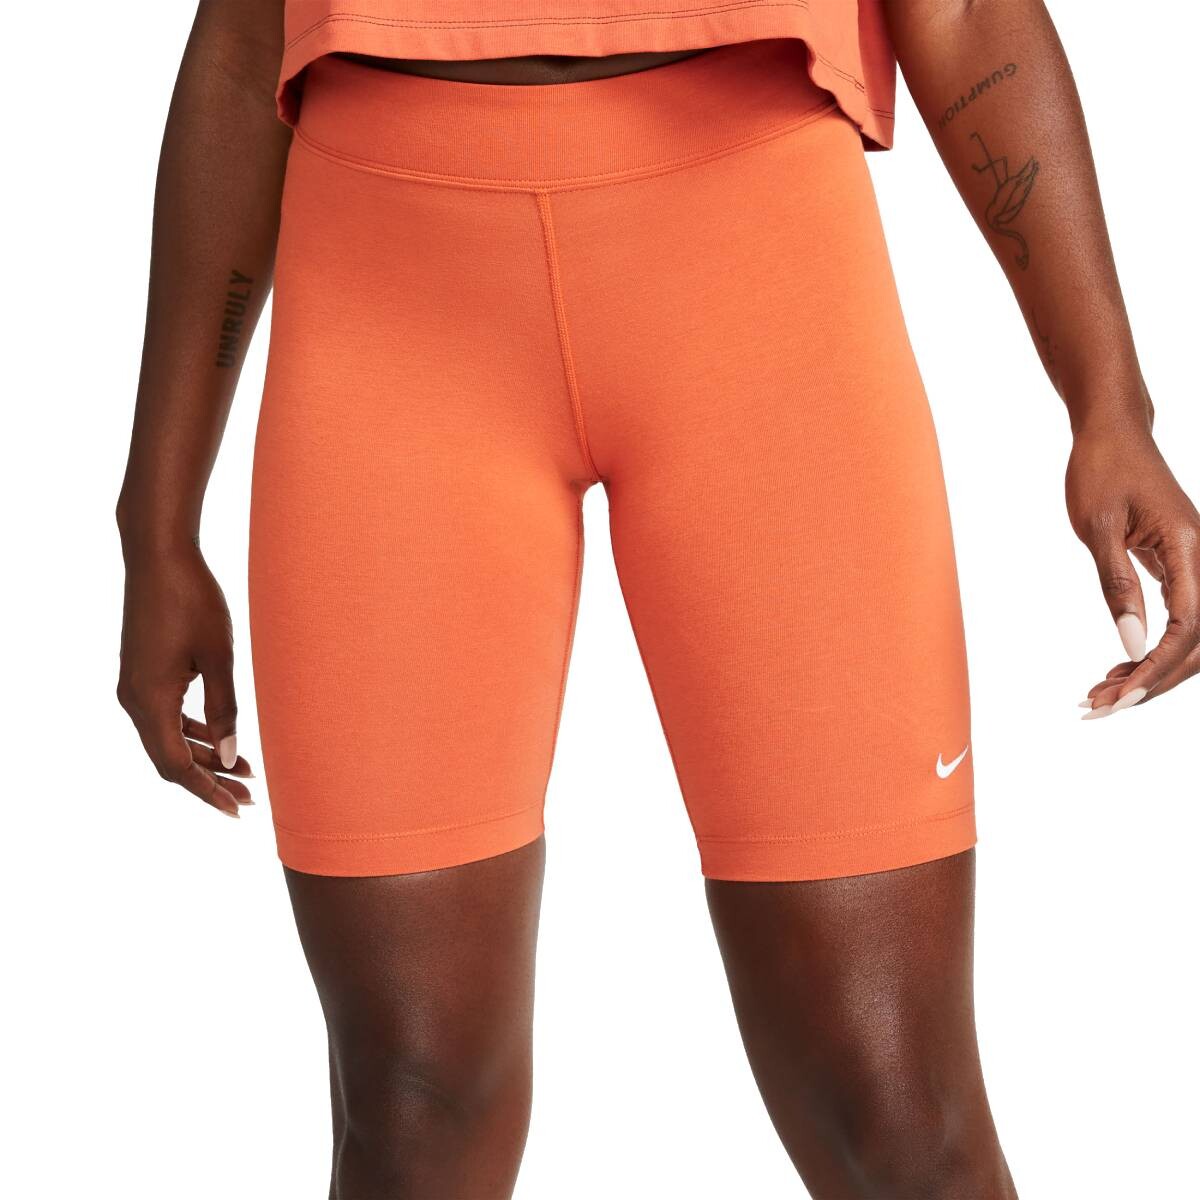 Calza Biker Nike Moda Dama Orange - S/C 